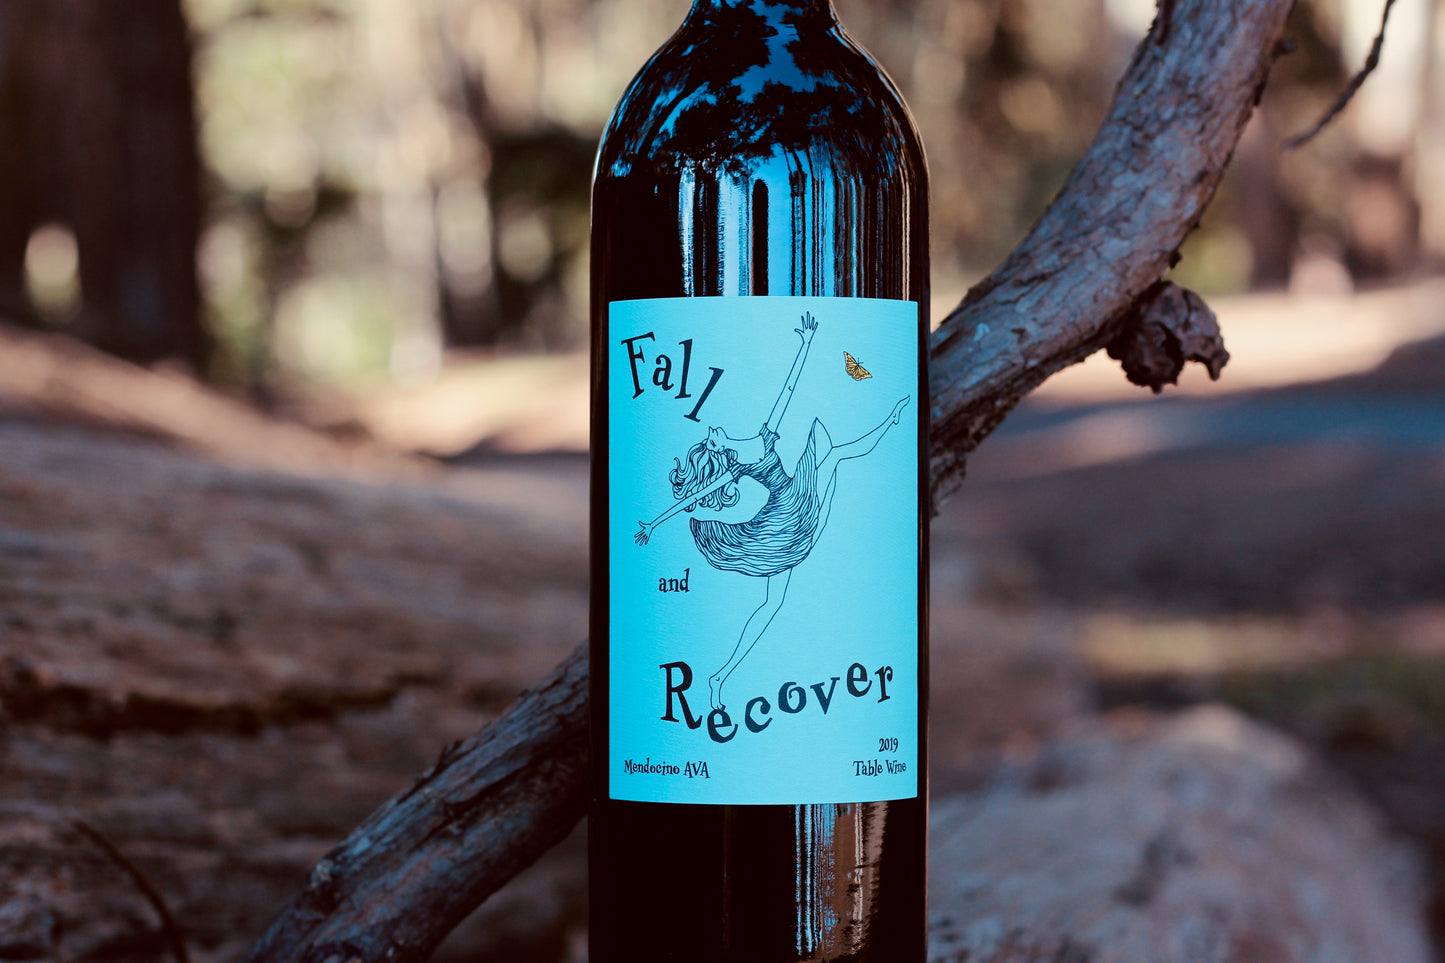 2019 Unturned Stone 'Fall & Recover' Table Wine, Mendocino AVA